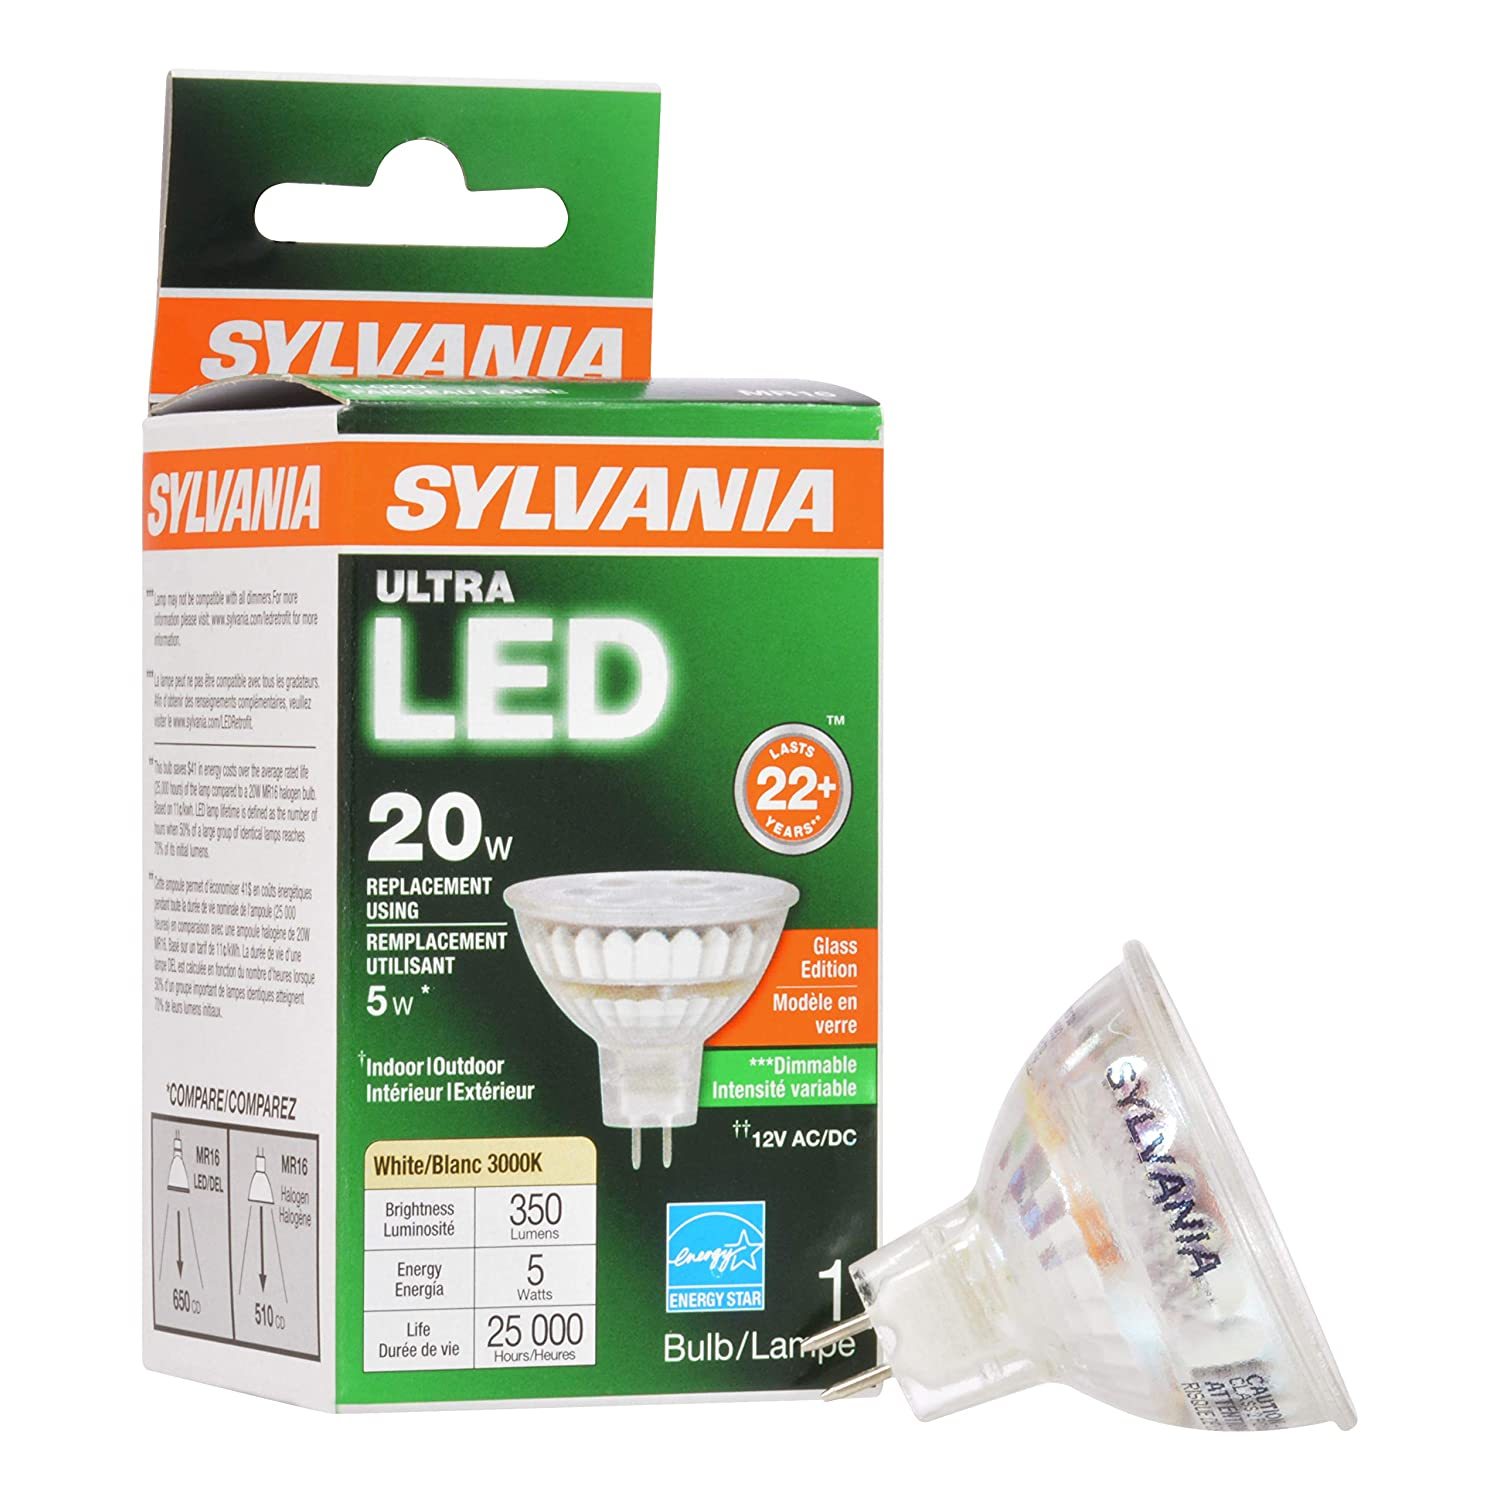 Sylvania Sylvania Ultra LED Flood LAMP, MR16, 5 WATTS, 3000K, 82 CRI, GU5.3 Base